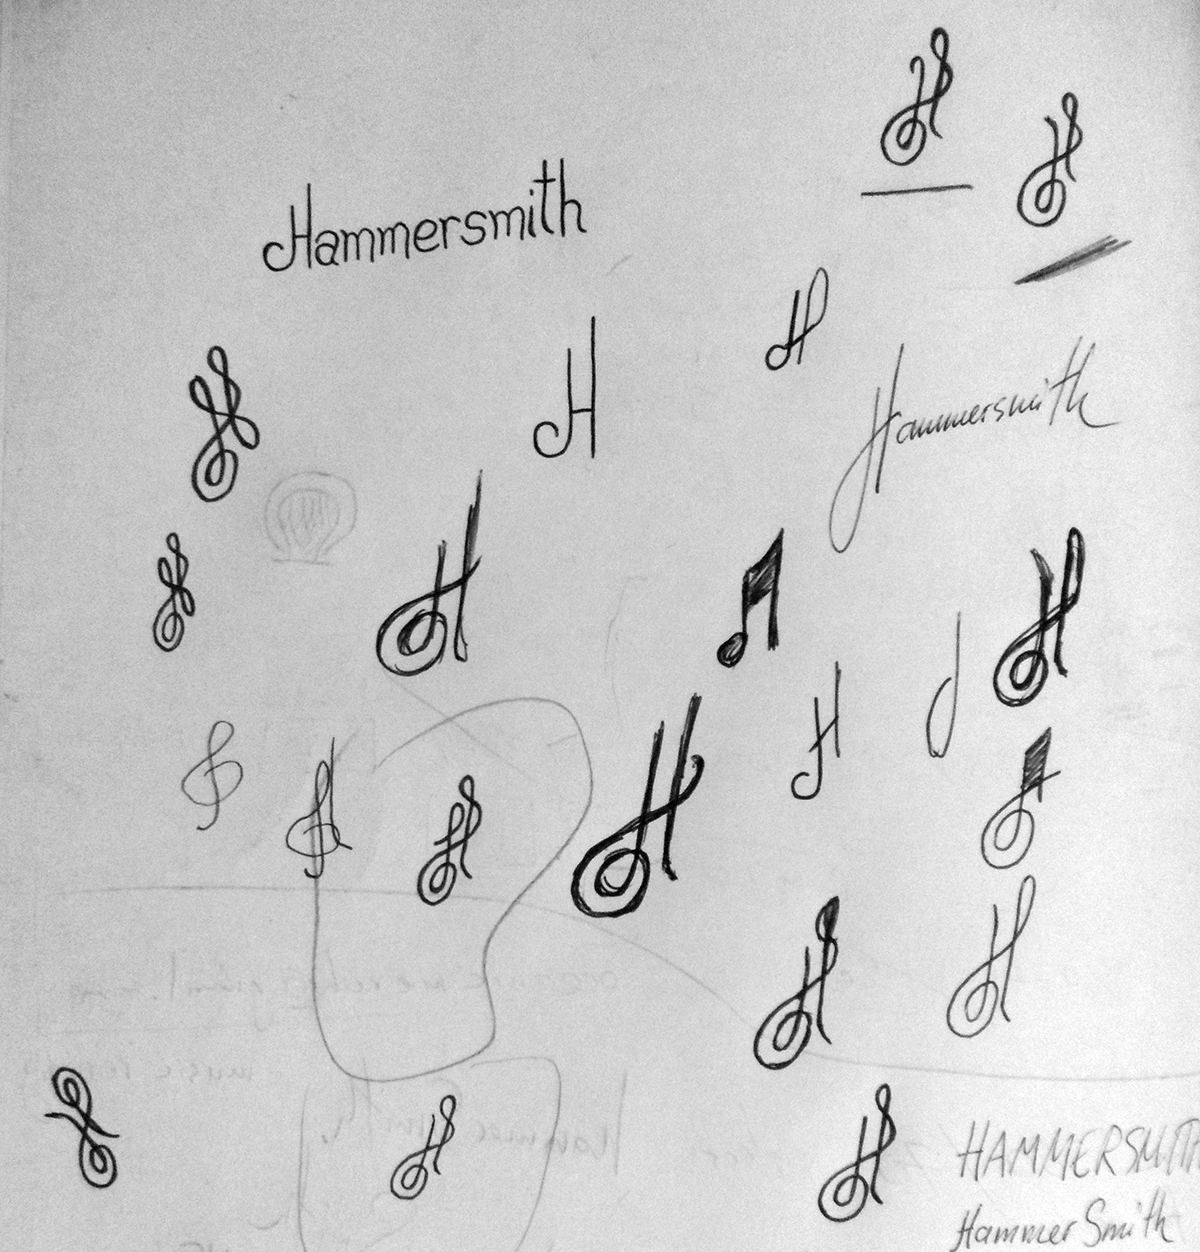 vadim makoyed vadimages logo identity recording studio Portland pdx type  g clef stroke hammersmith design Classic lines Swirls flow